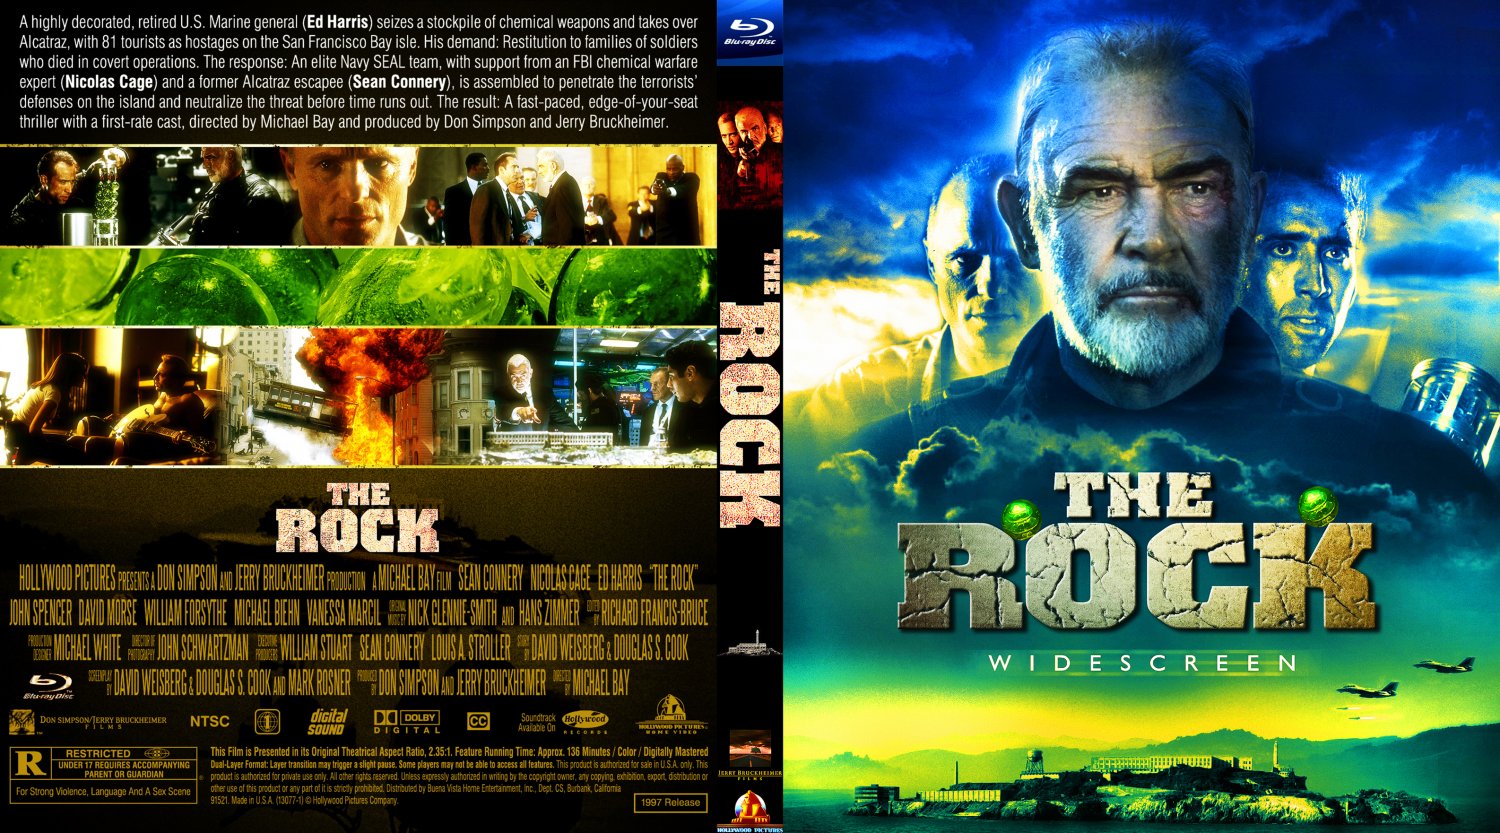 The Rock - Region A - Bluray Cover
Keywords: ;media_cover